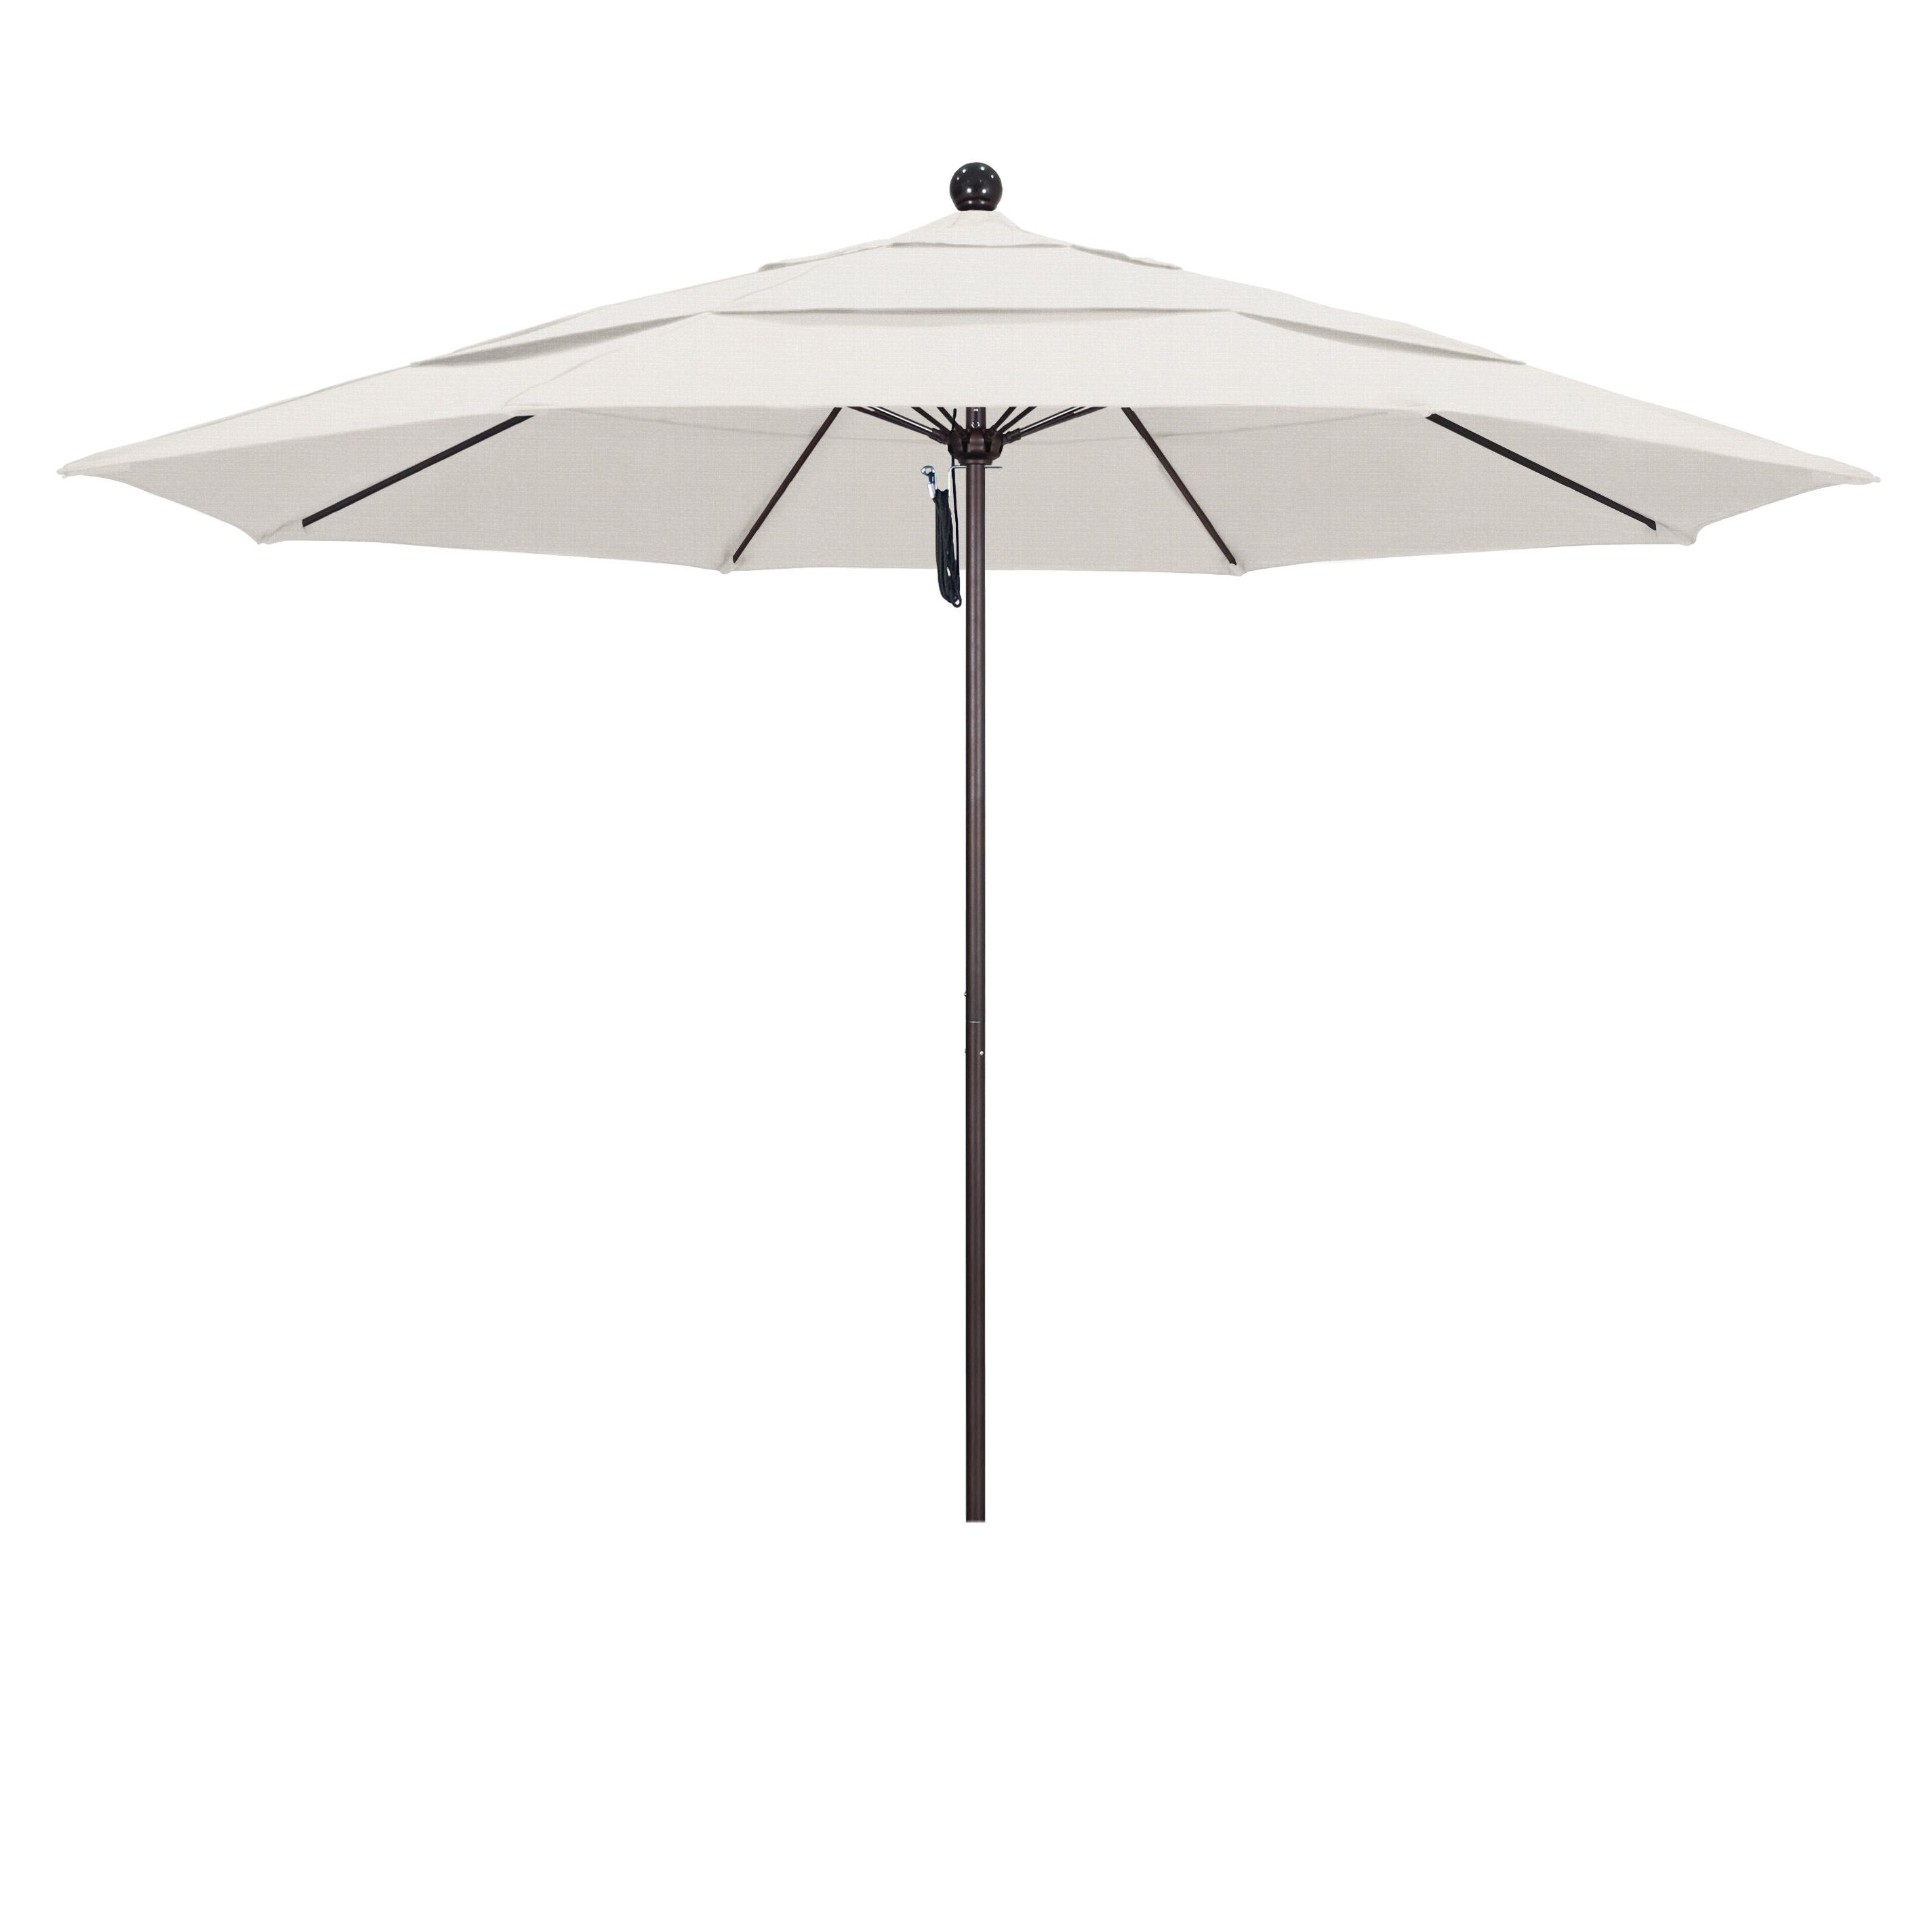 Most Recent Mcdougal Market Umbrellas Intended For Davenport 11' Market Umbrella (View 11 of 20)